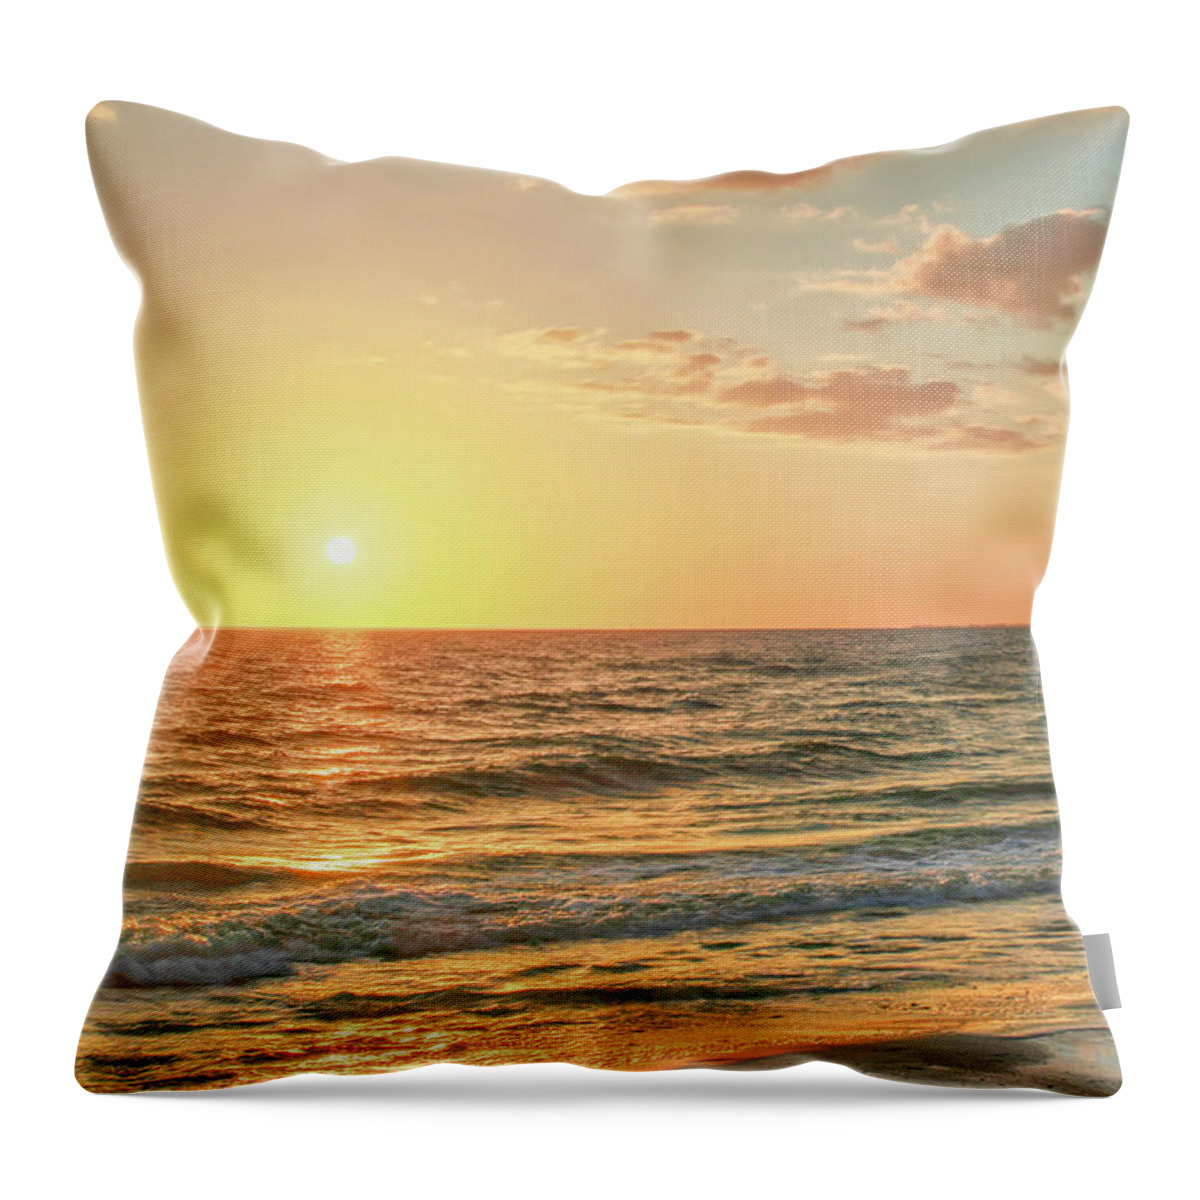 Art Prints Throw Pillow featuring the photograph Beach 01 by Nunweiler Photography